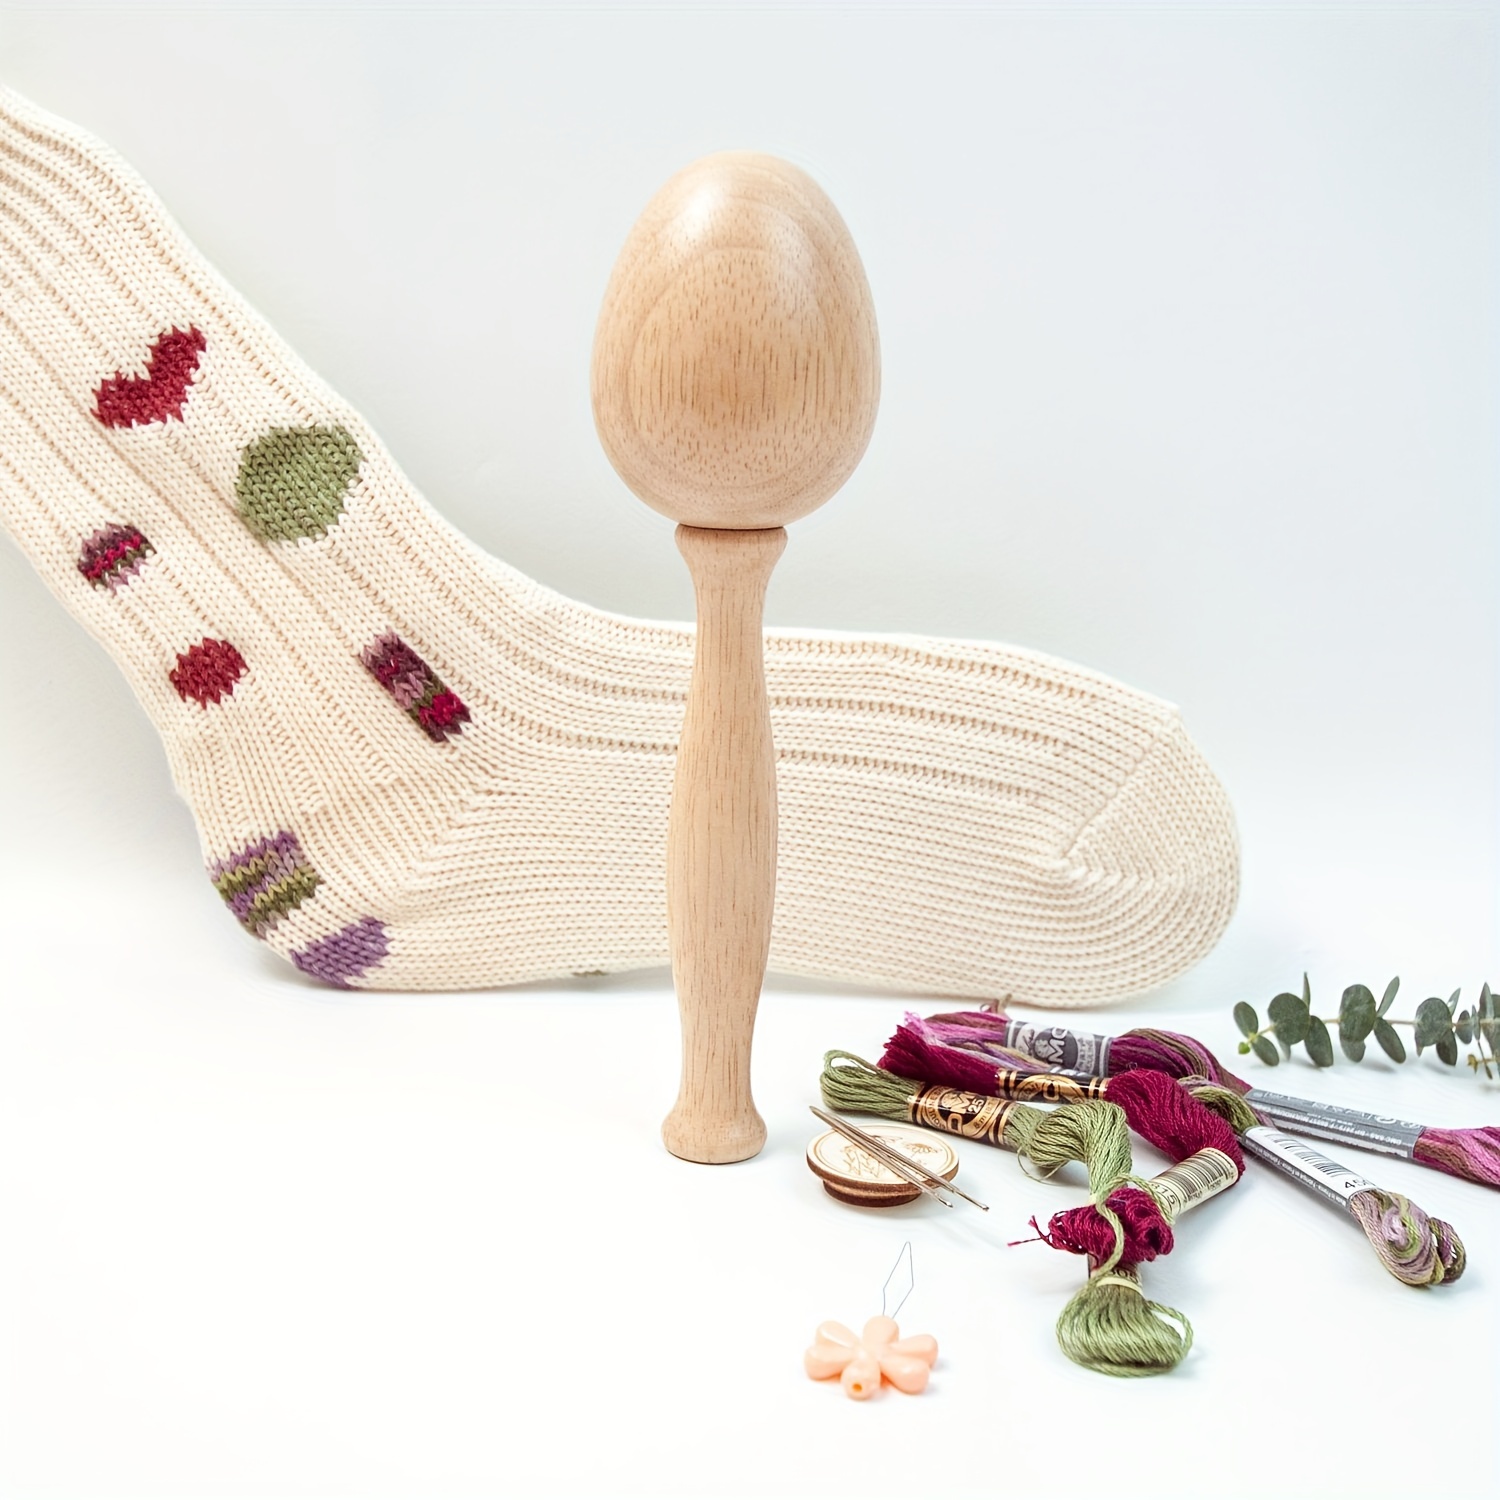 Wooden Mushroom Darning Kit Sewing Tools